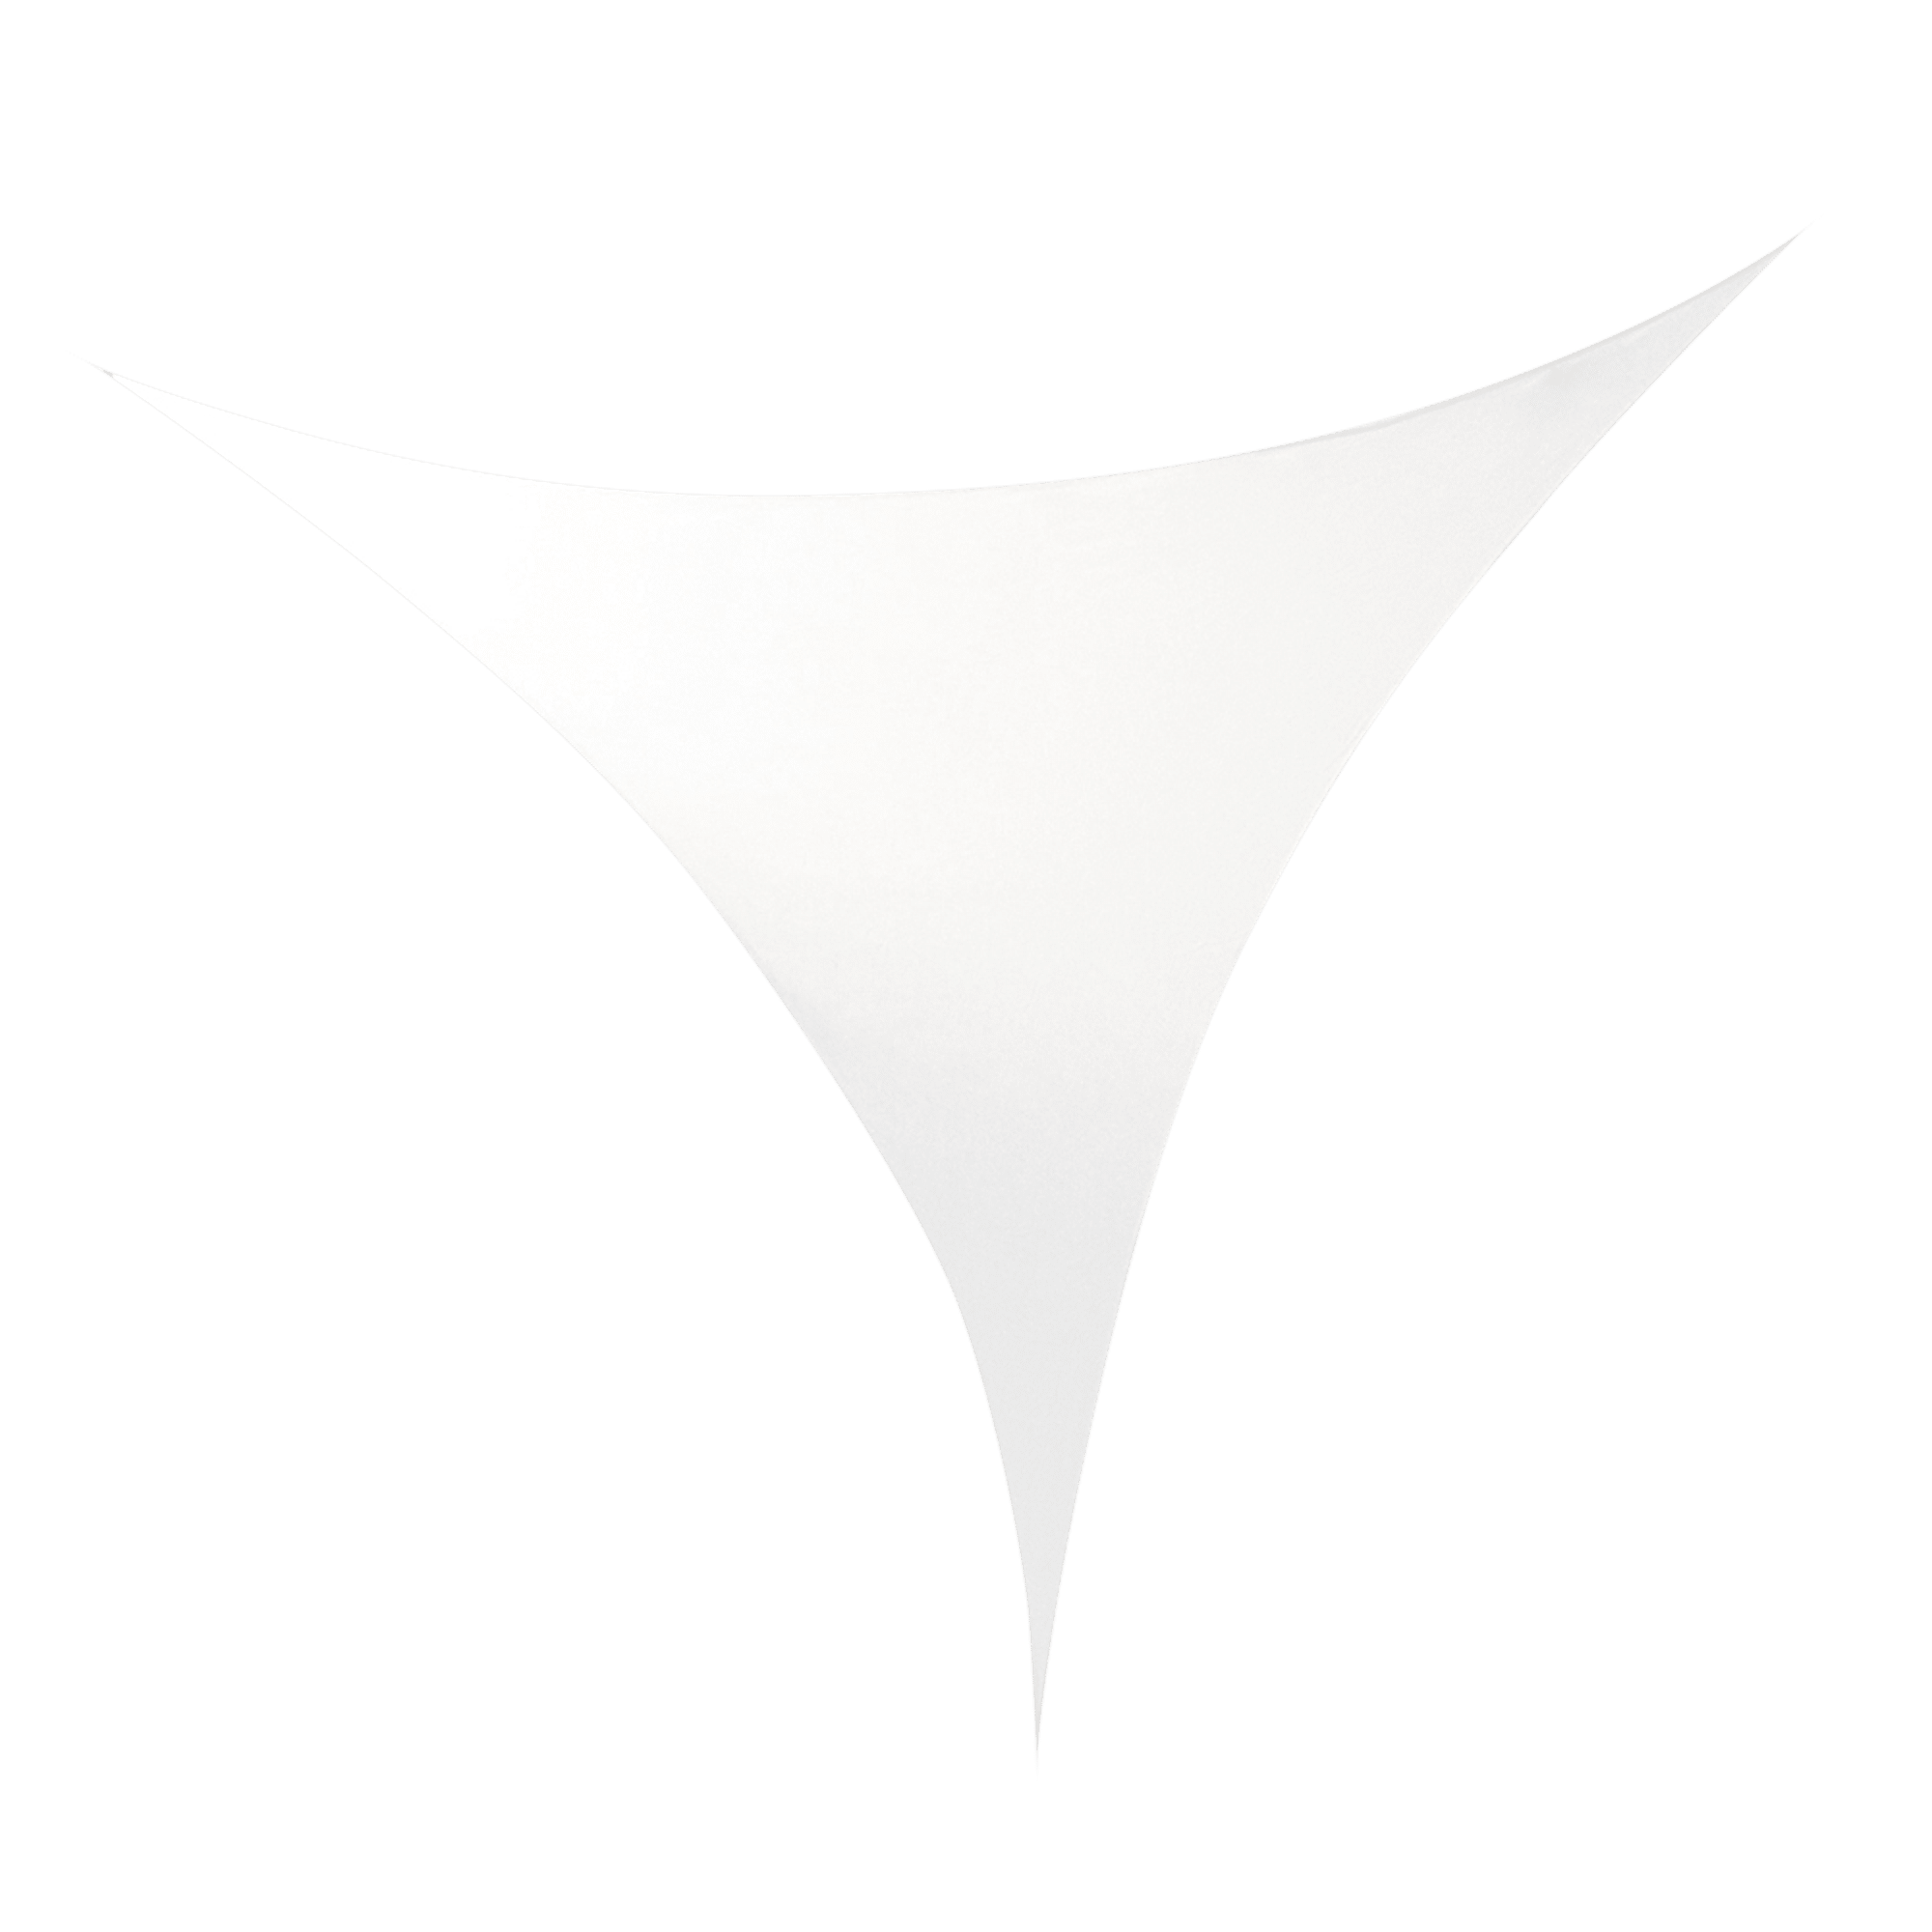 Stretch Shape Triangle White - Onlinediscowinkel.nl